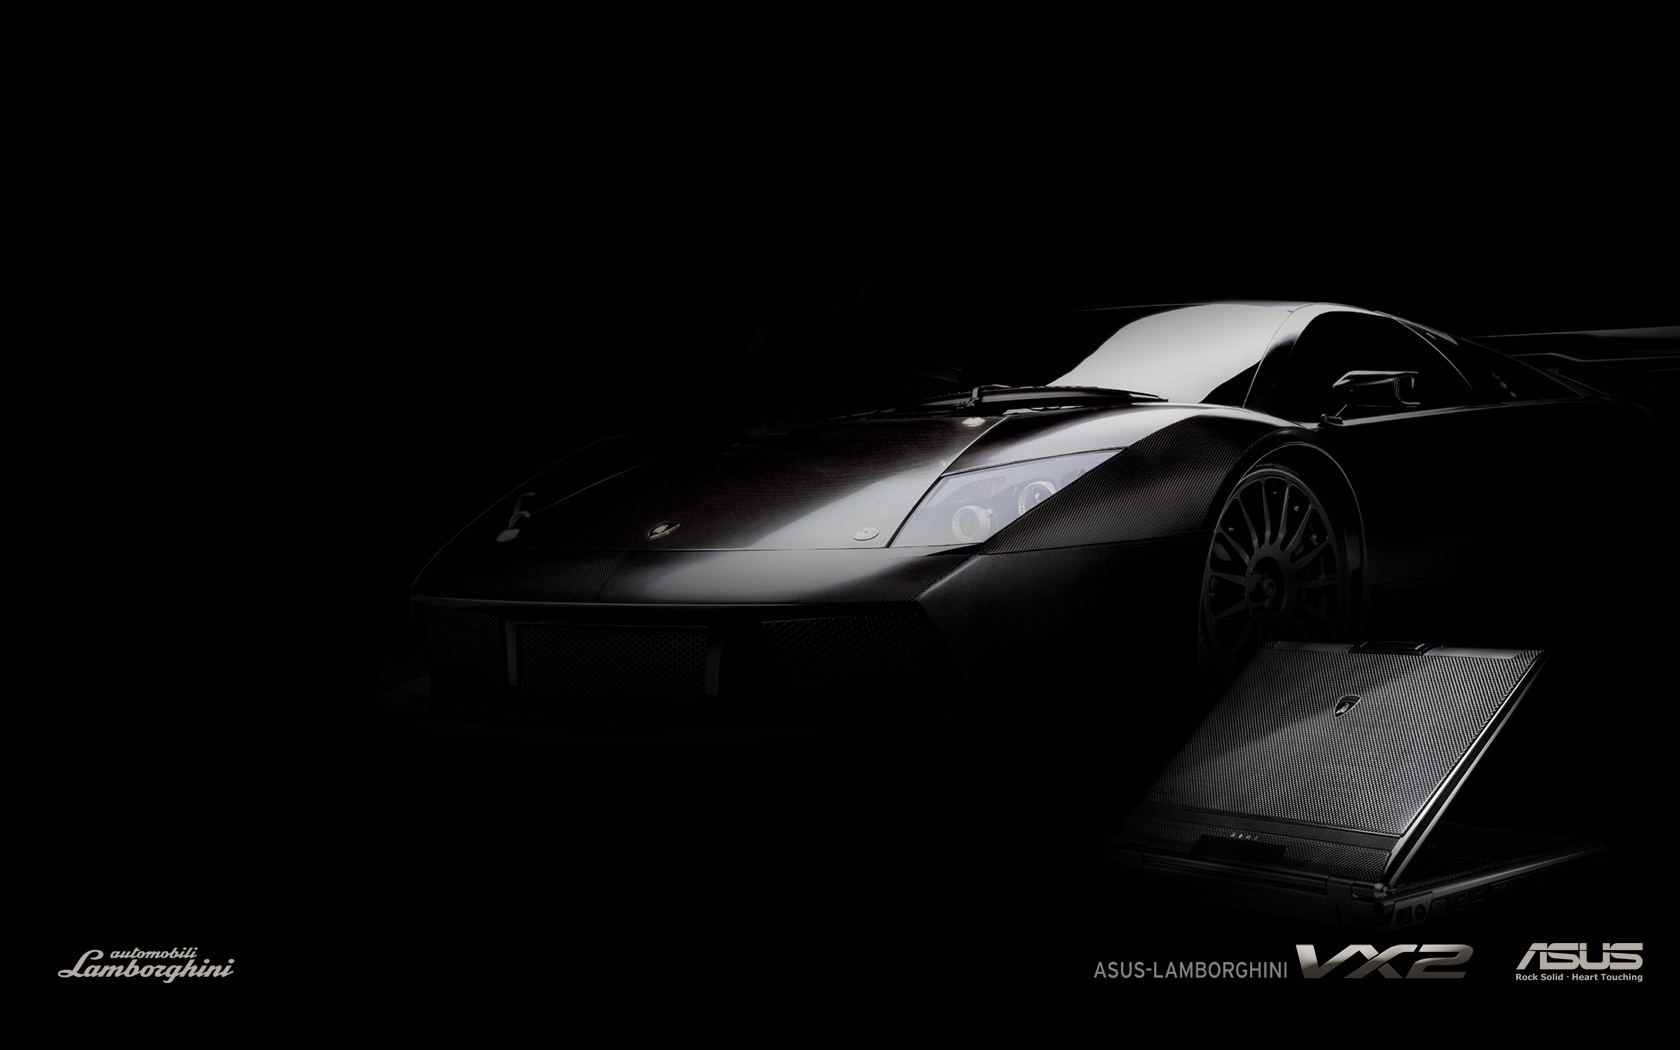  HQ Asus Lamborghini Vx2 Black Laptop Wallpaper   Free HQ Wallpapers